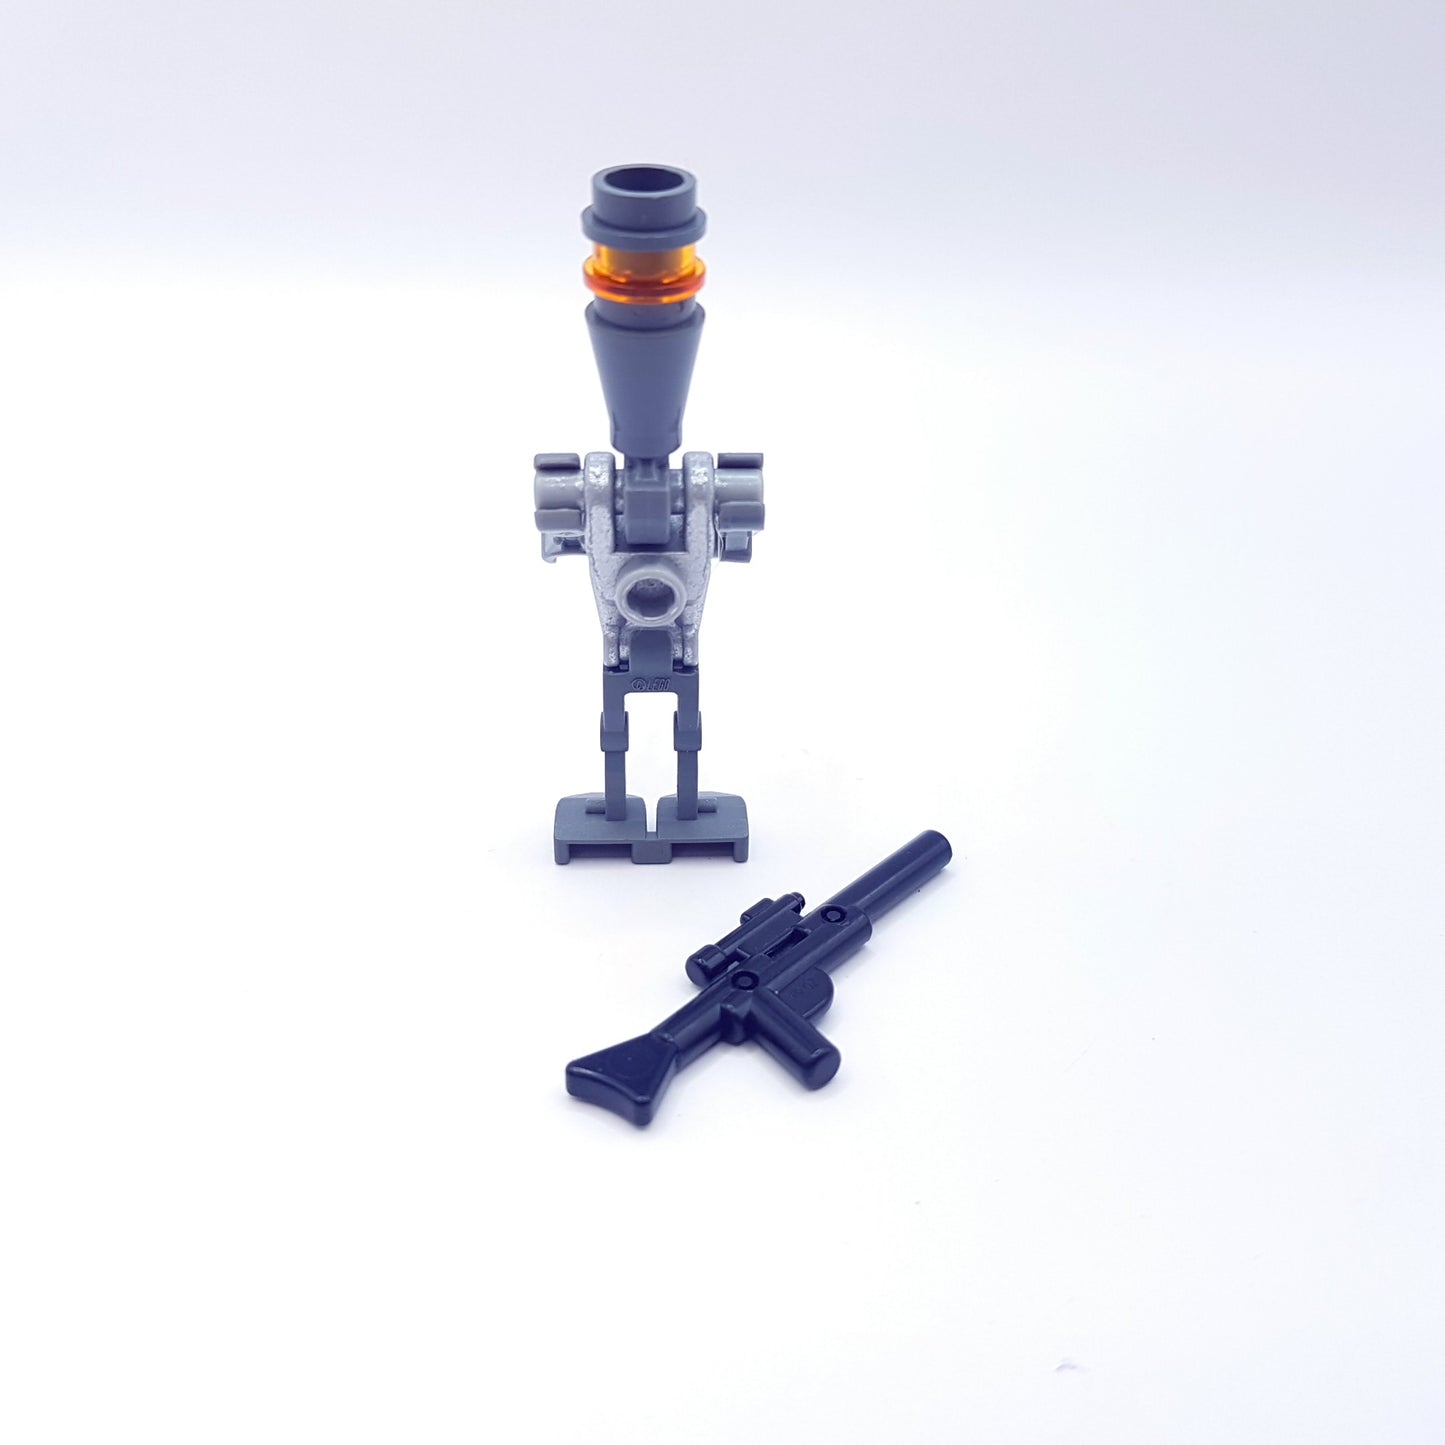 LEGO Minifigur - Assassin Droide (Silver) sw0229 (2009) - Star Wars - gebraucht